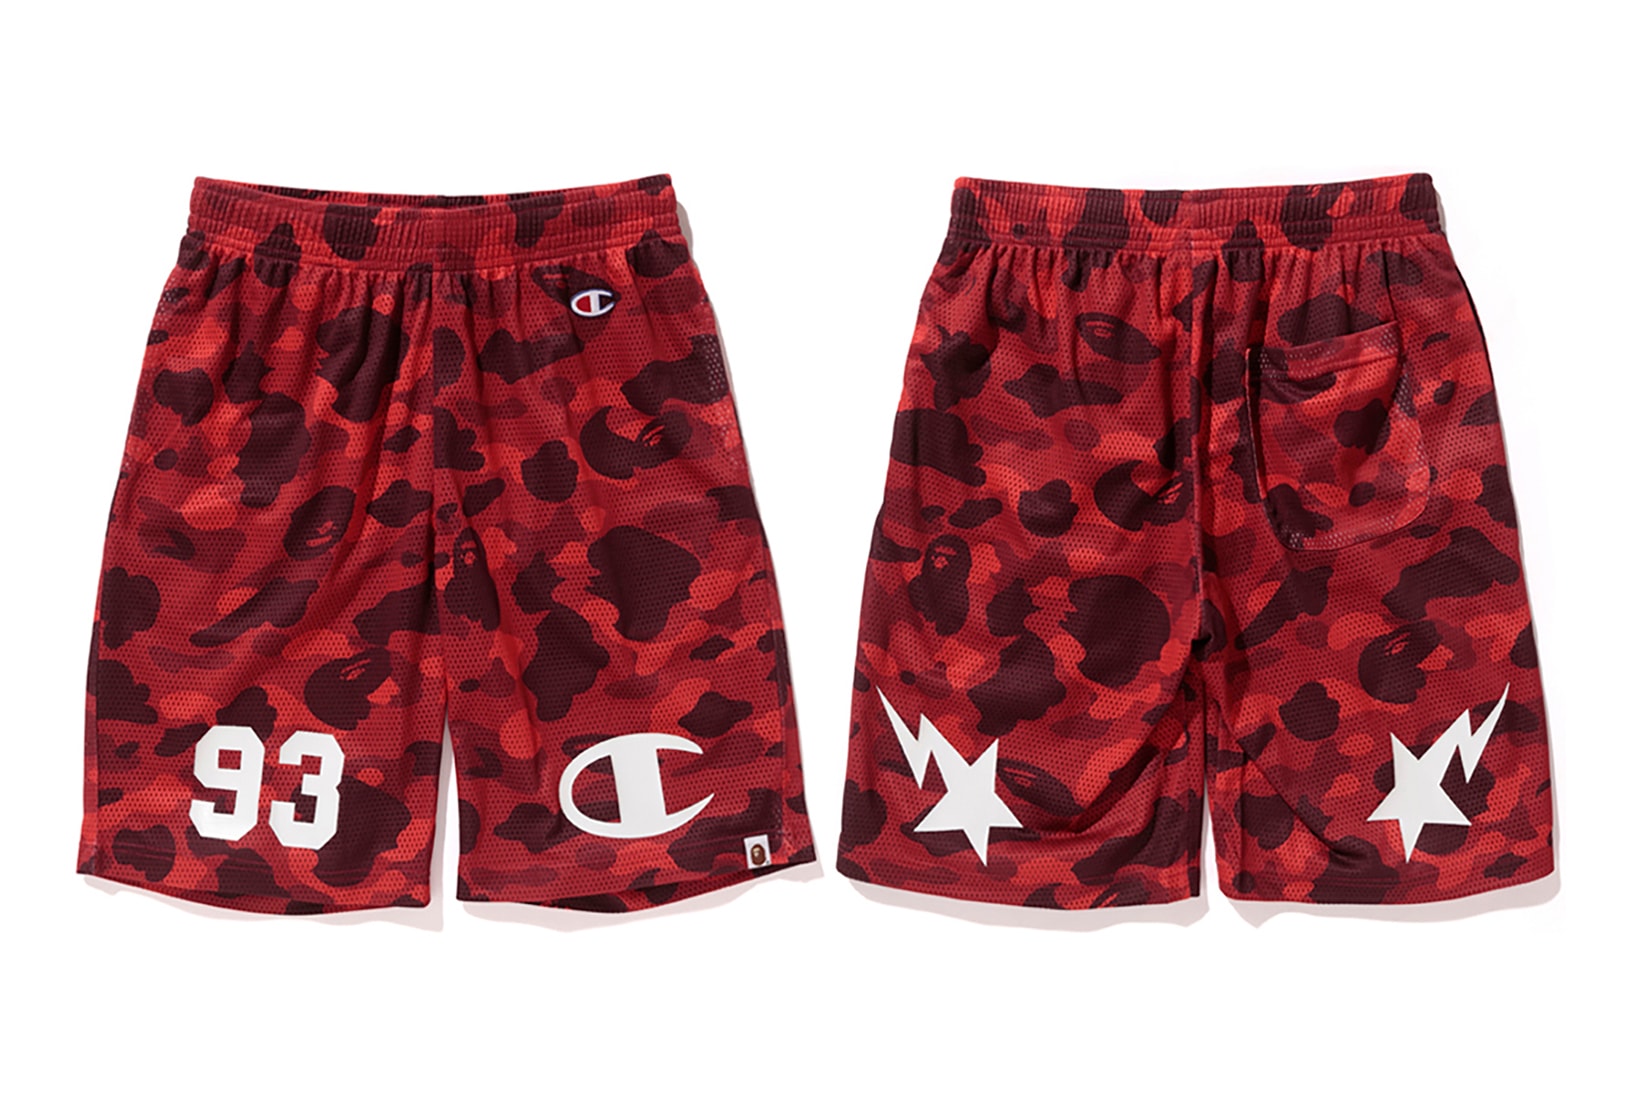 Bape x Champion Red Camouflage Basketball Shorts